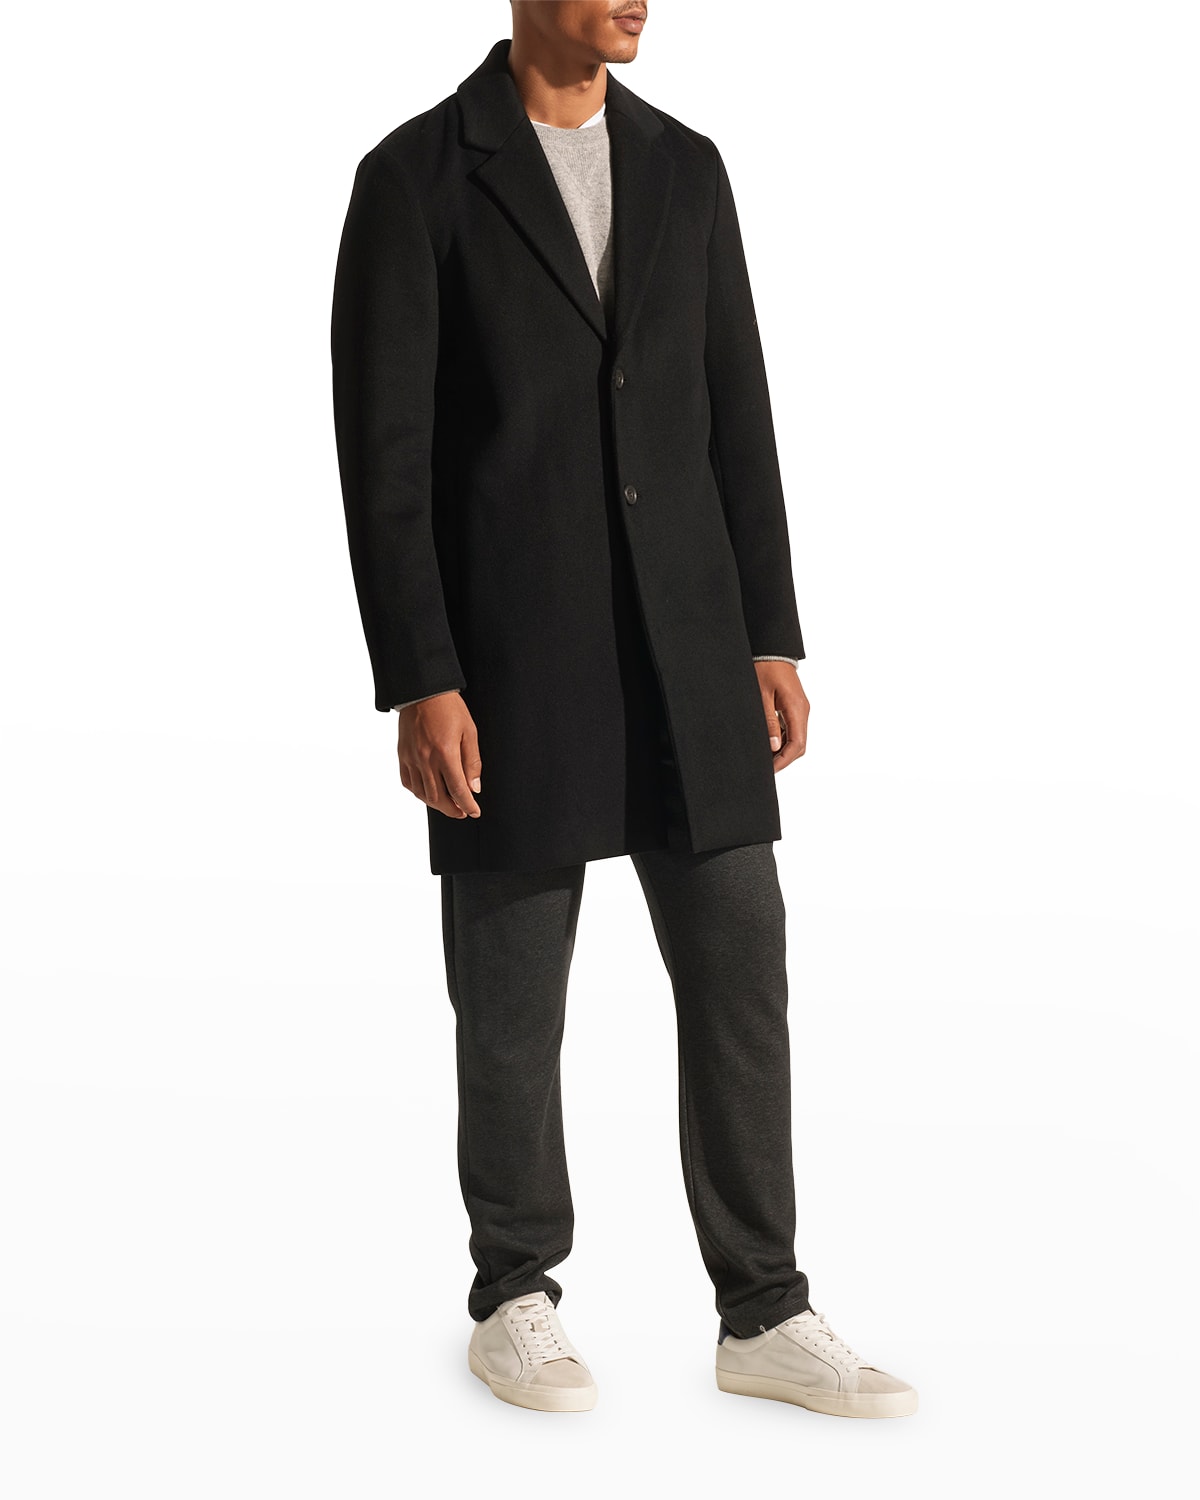 Vince Men's Classic Wool-Cashmere Topcoat